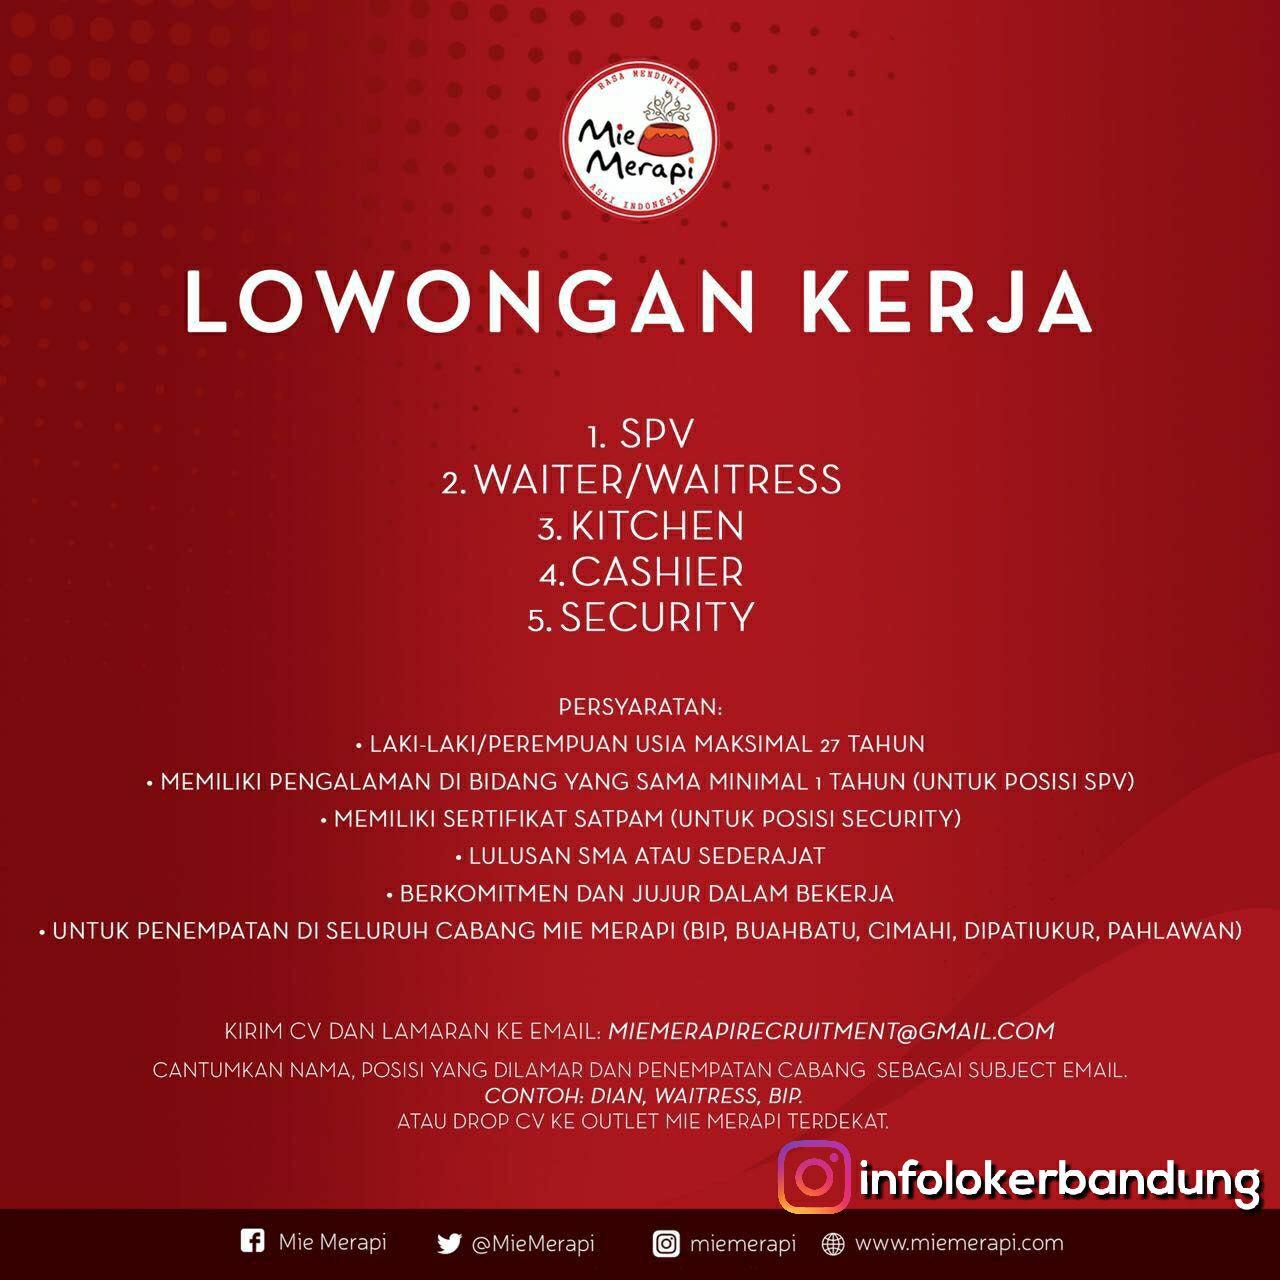 Lowongan Kerja Mie Merapi Bandung Januari 2018 - Info 